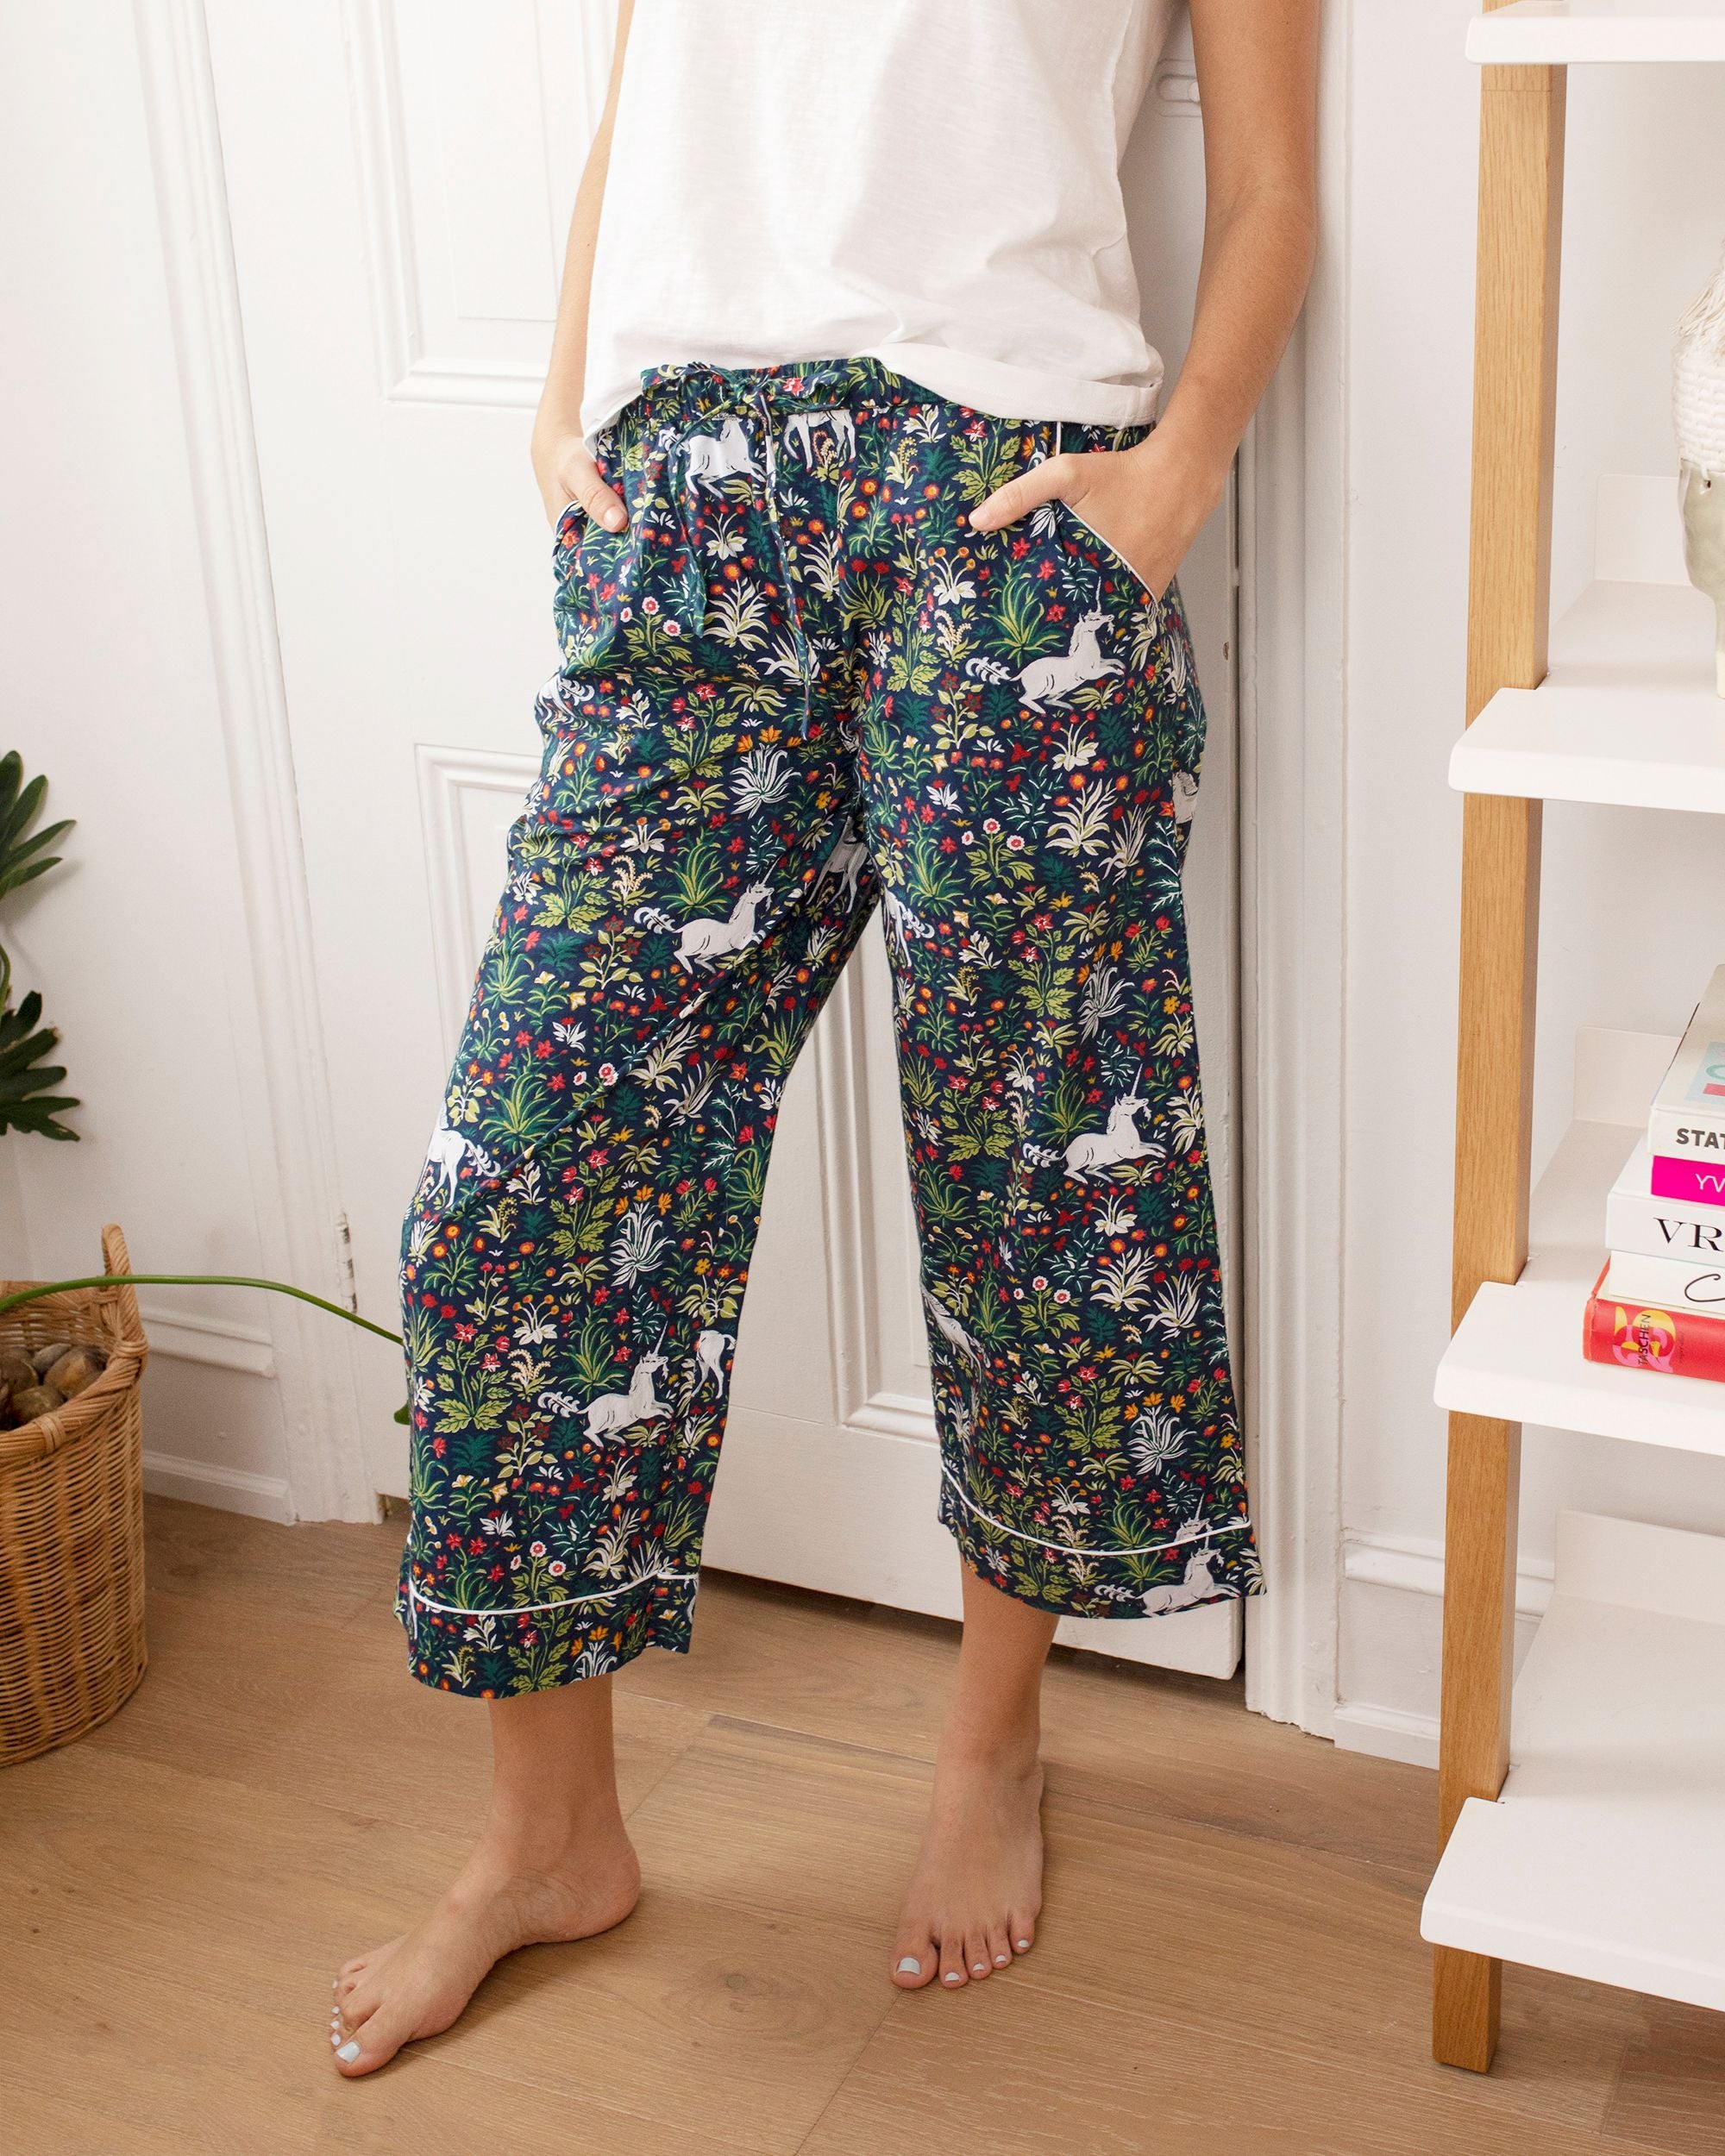 Multi Rainbow Unicorn Stars Print Loungewear Sleepwear Pyjama Bottoms Pants  -  Canada